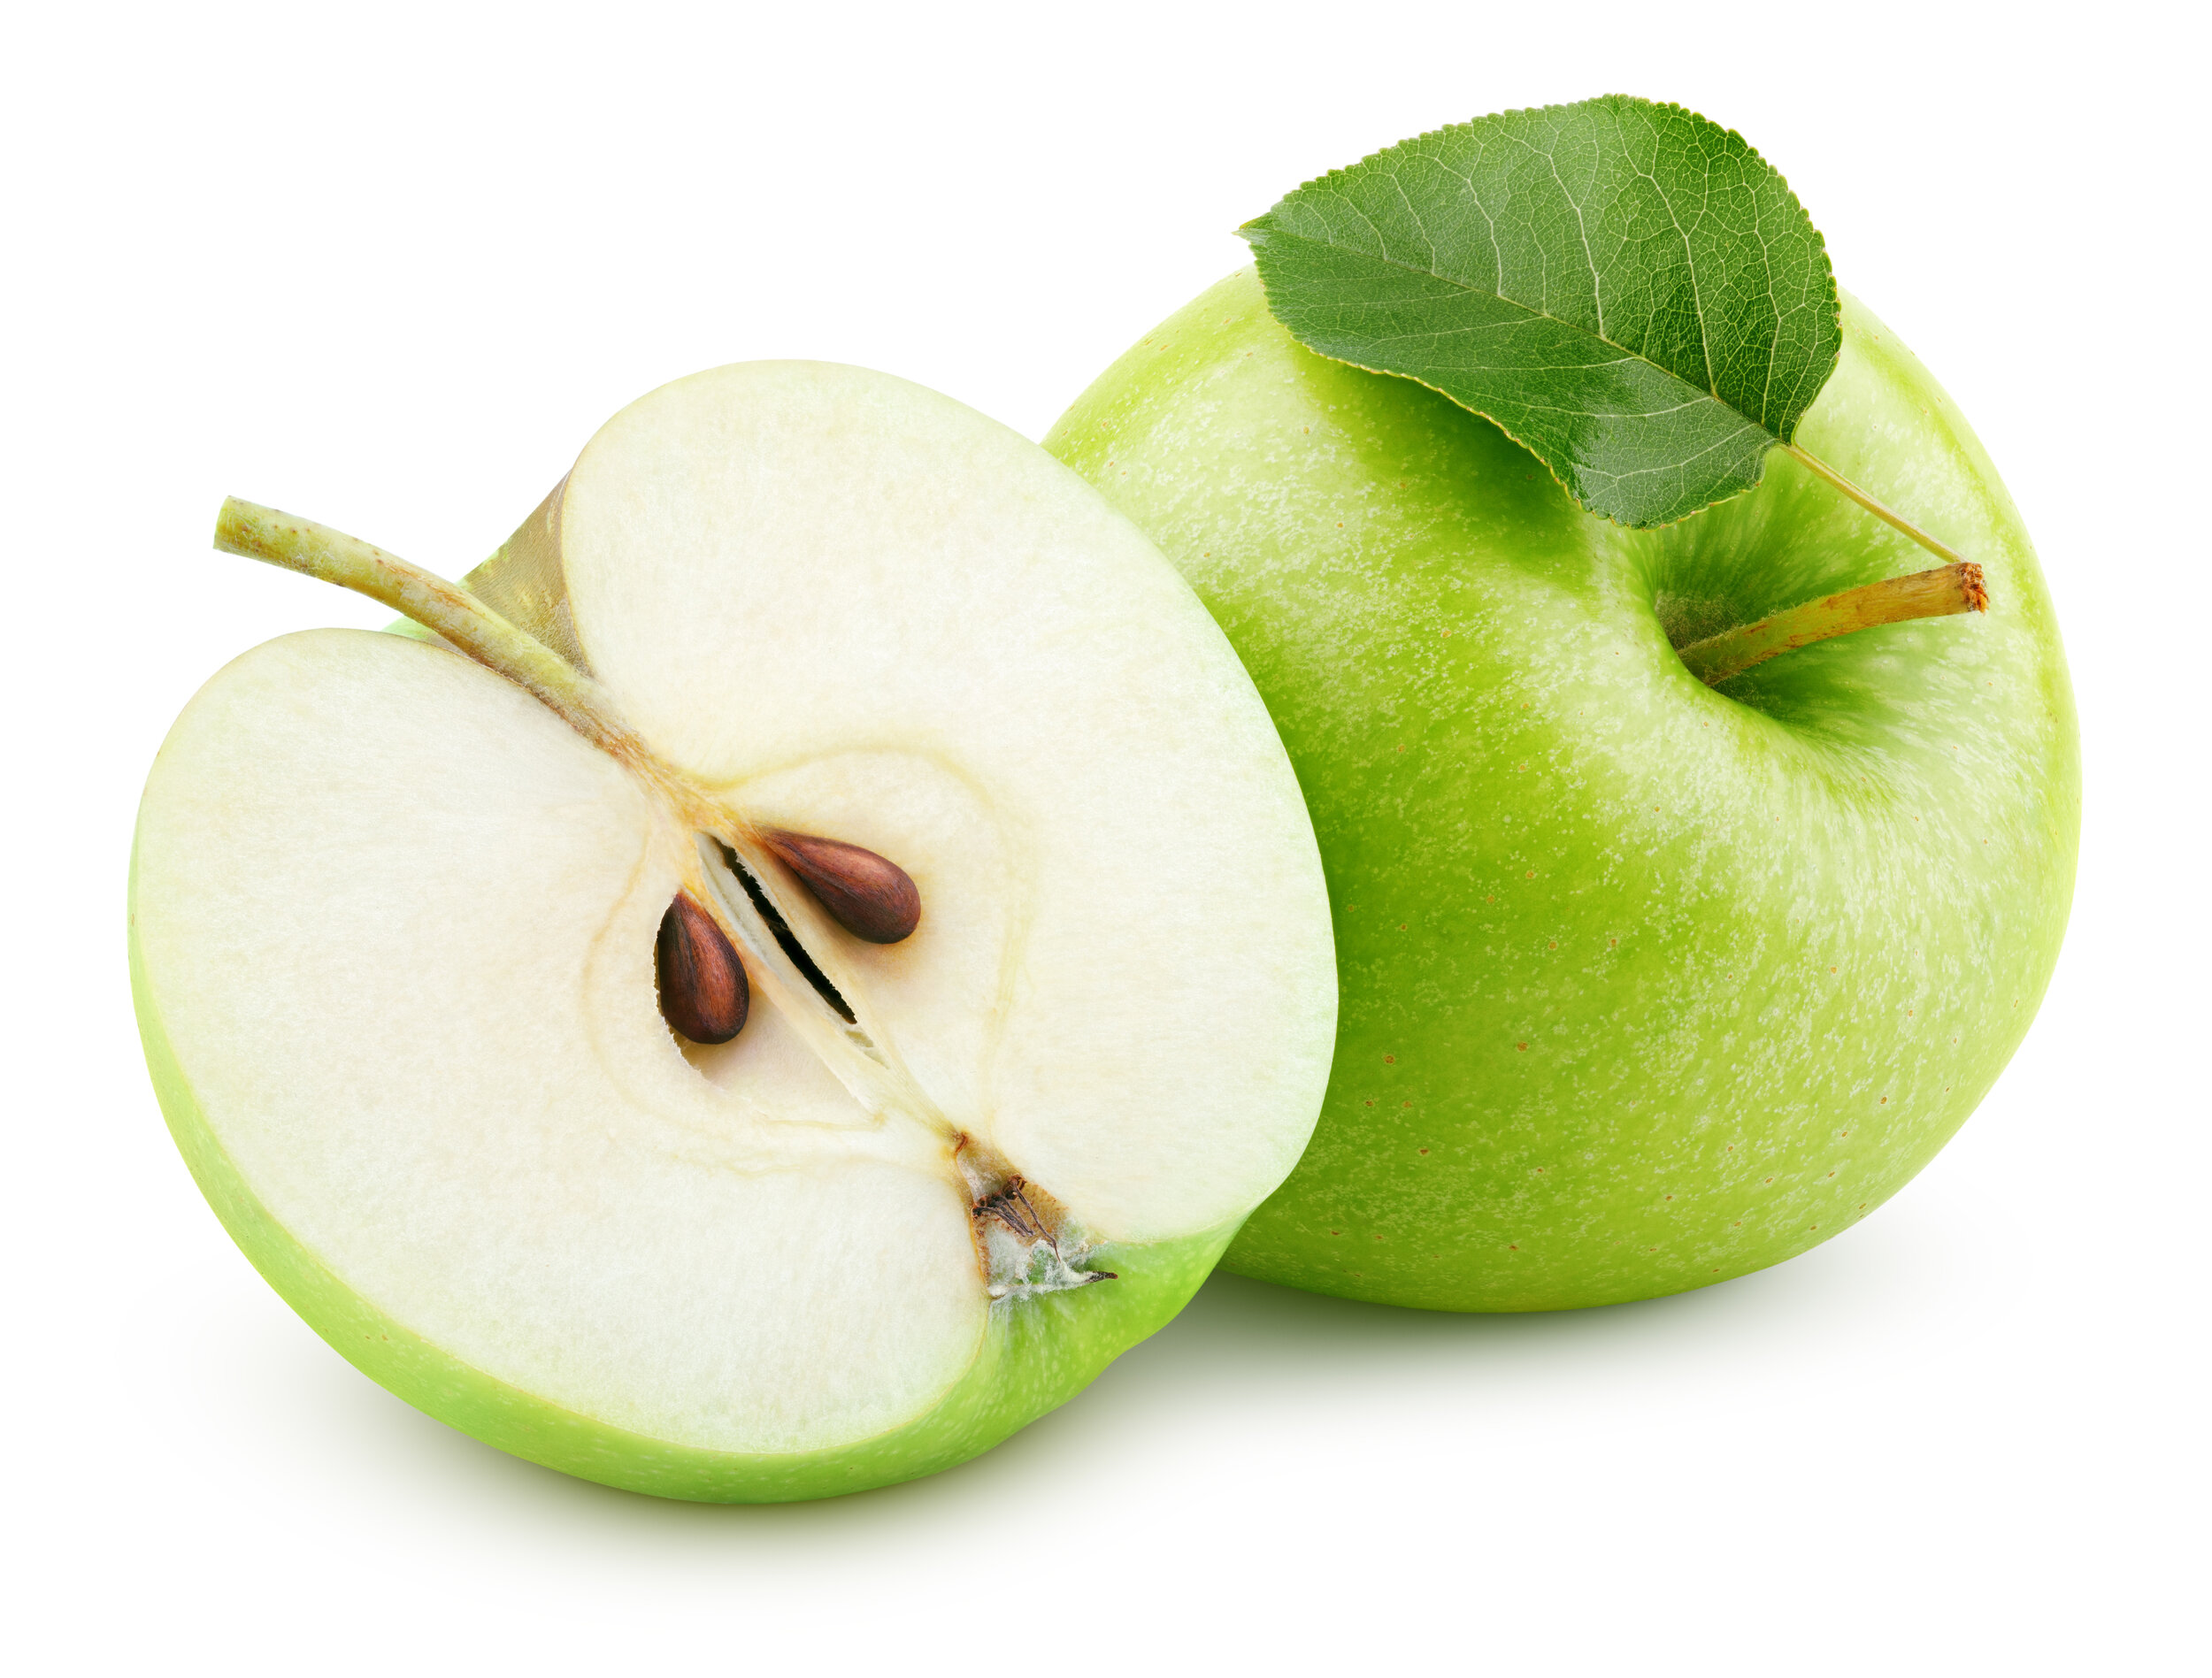 bigstock-Ripe-Green-Apple-Fruit-With-Ha-305318467.jpg